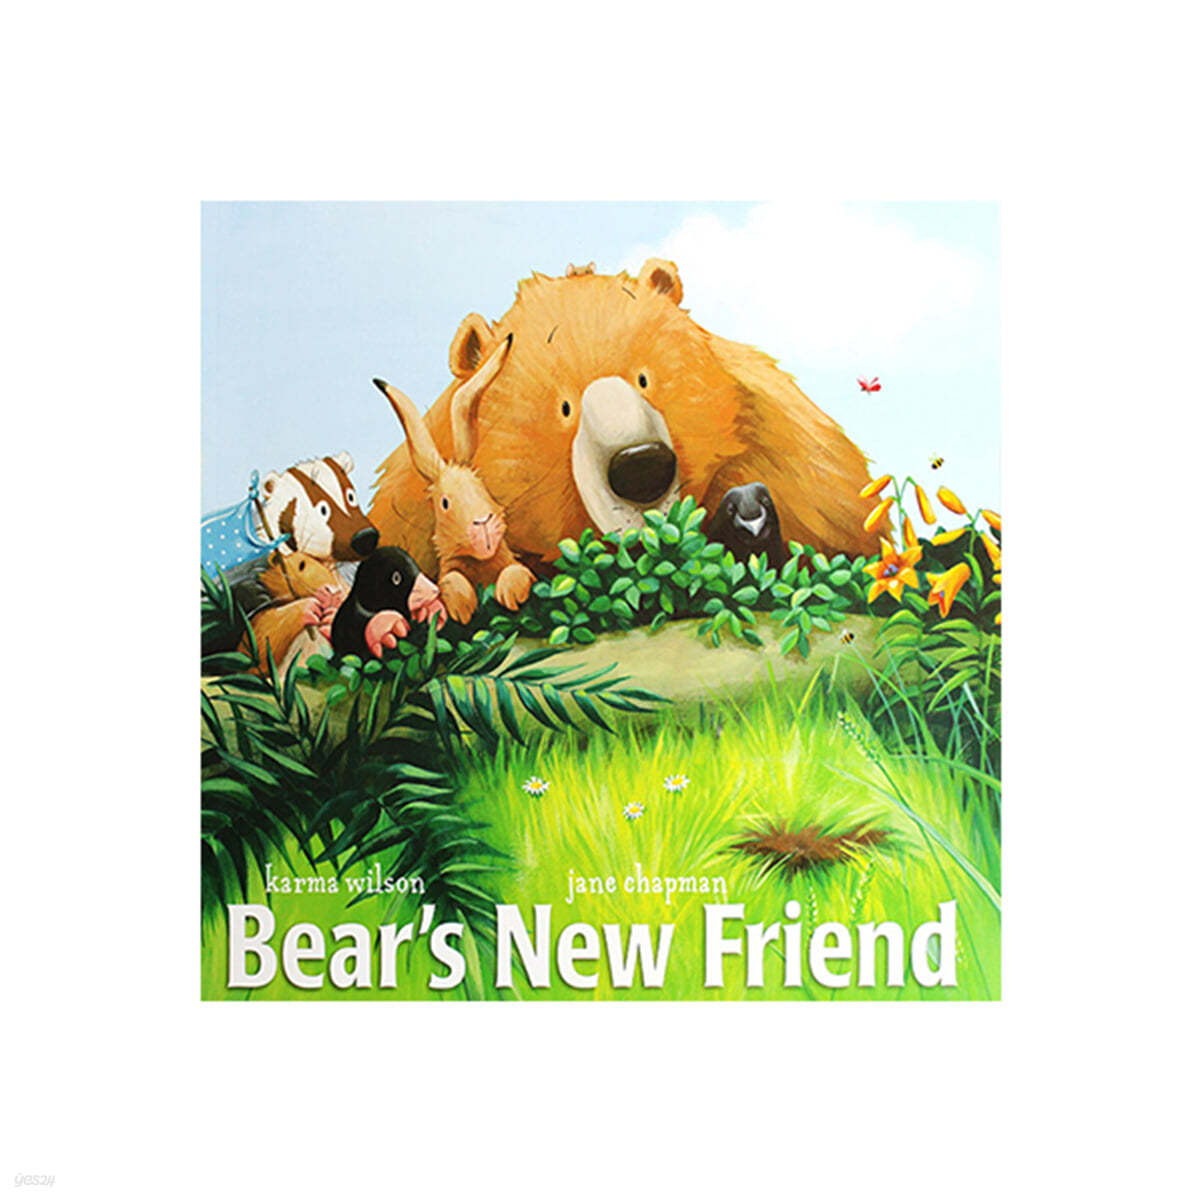 Bears new friend